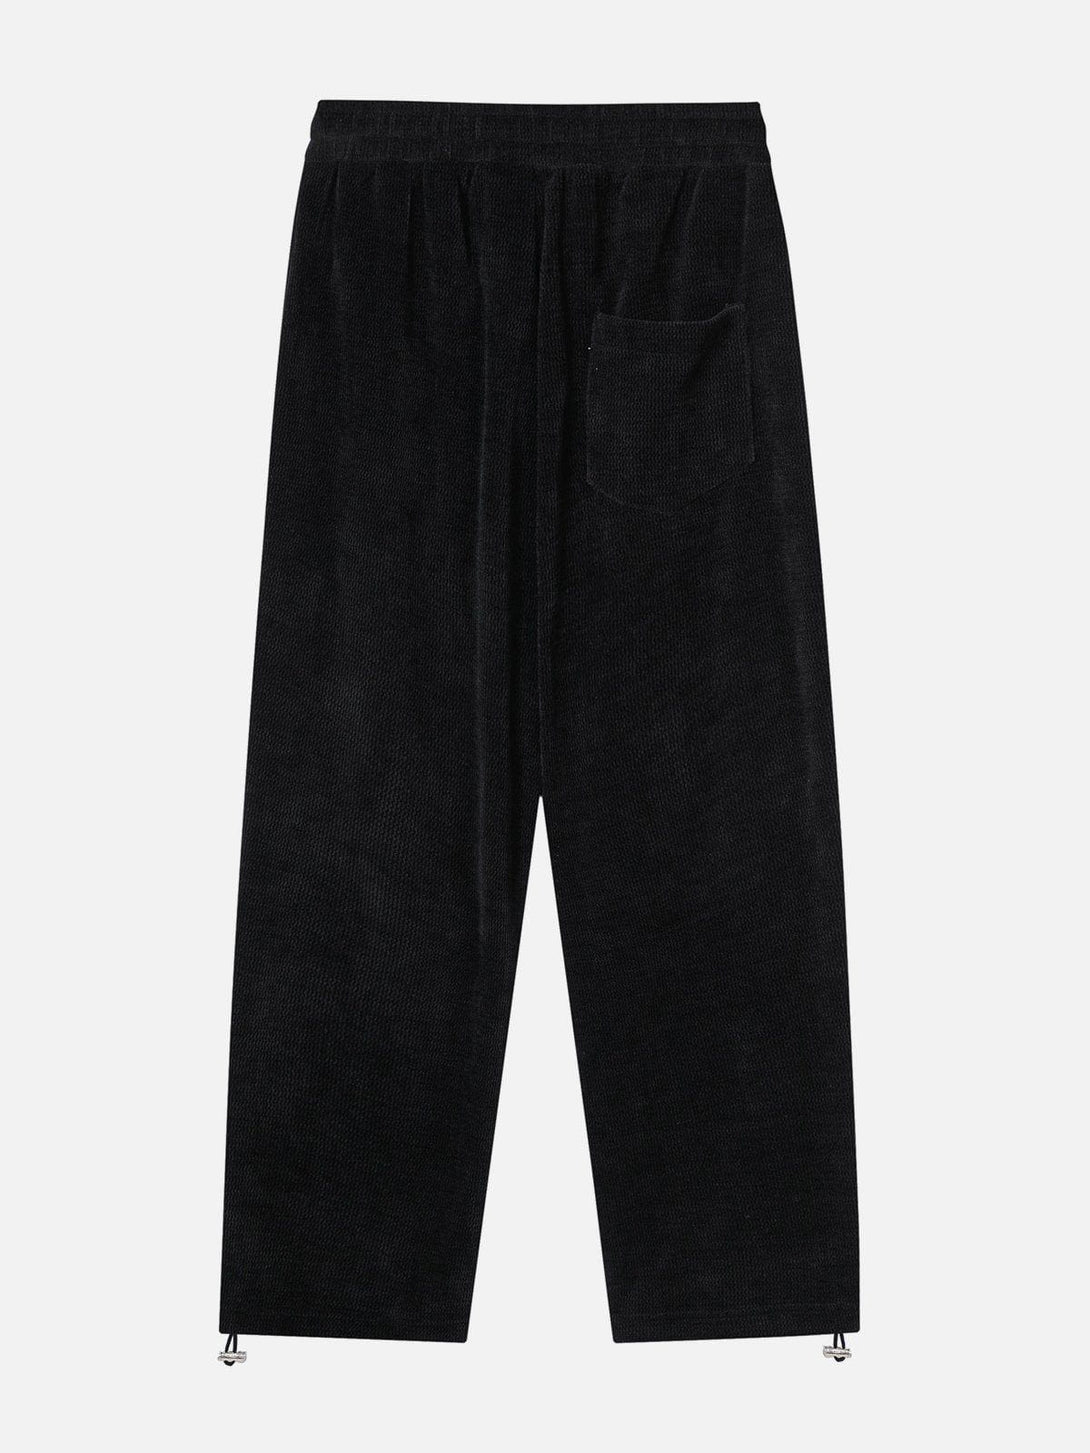 Levefly - Corduroy Drawstring Pants - Streetwear Fashion - levefly.com